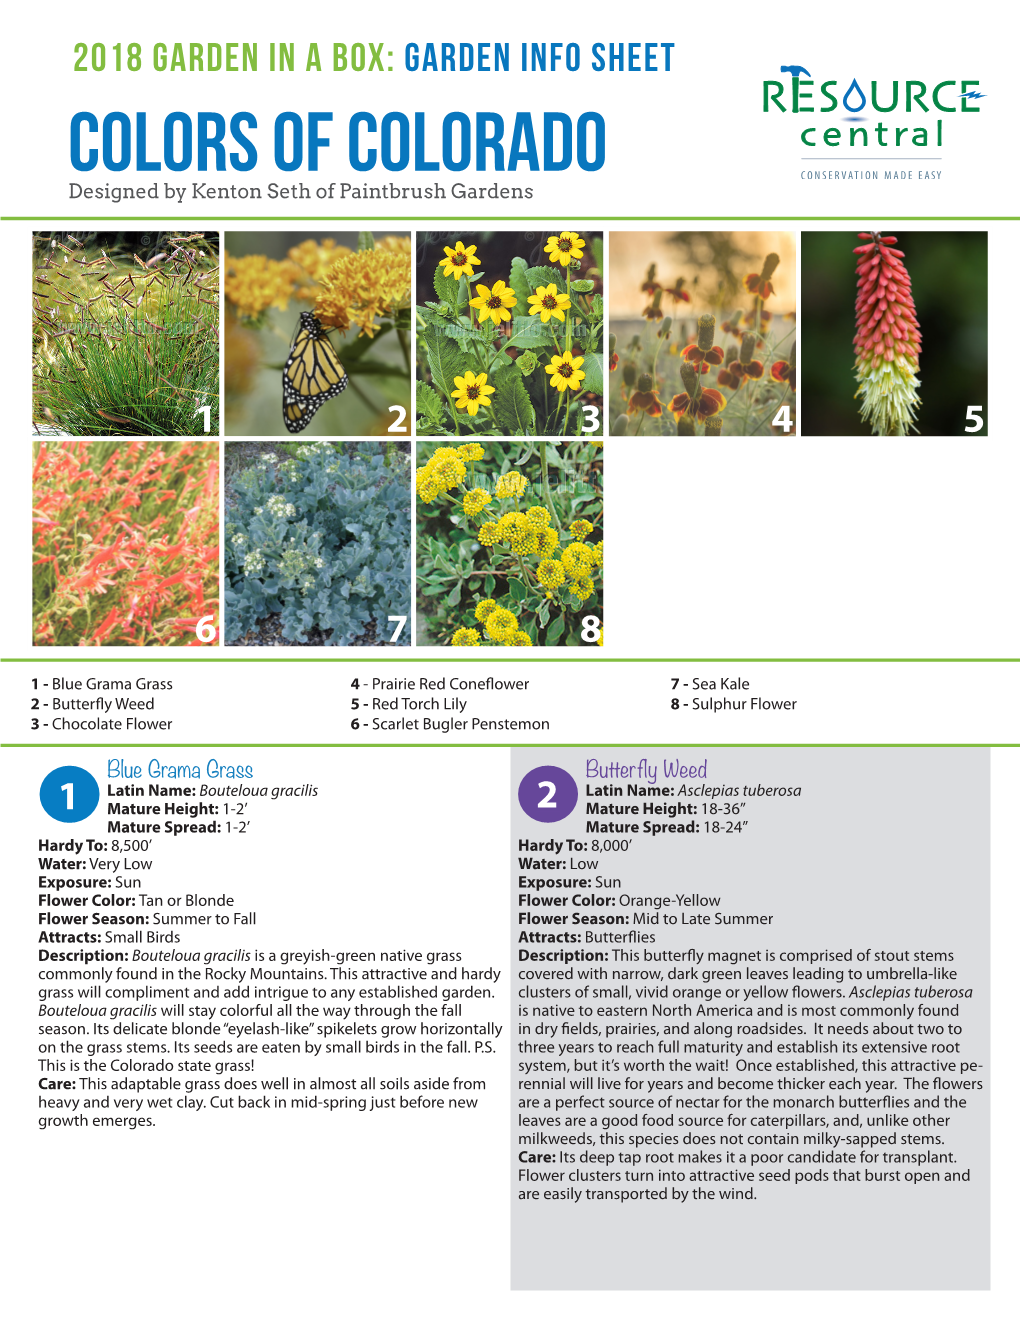 Colors of Colorado Designed by Kenton Seth of Paintbrush Gardens